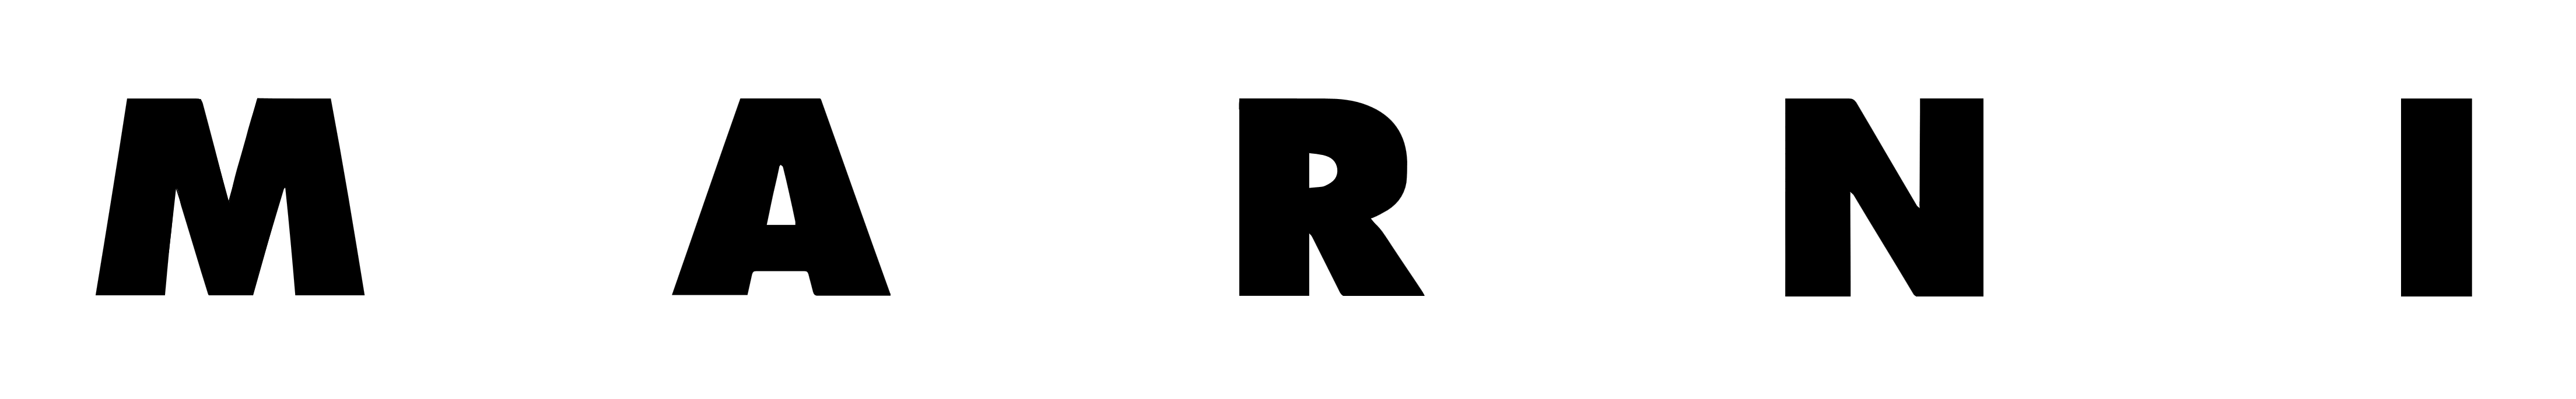 Marni logo, logotype